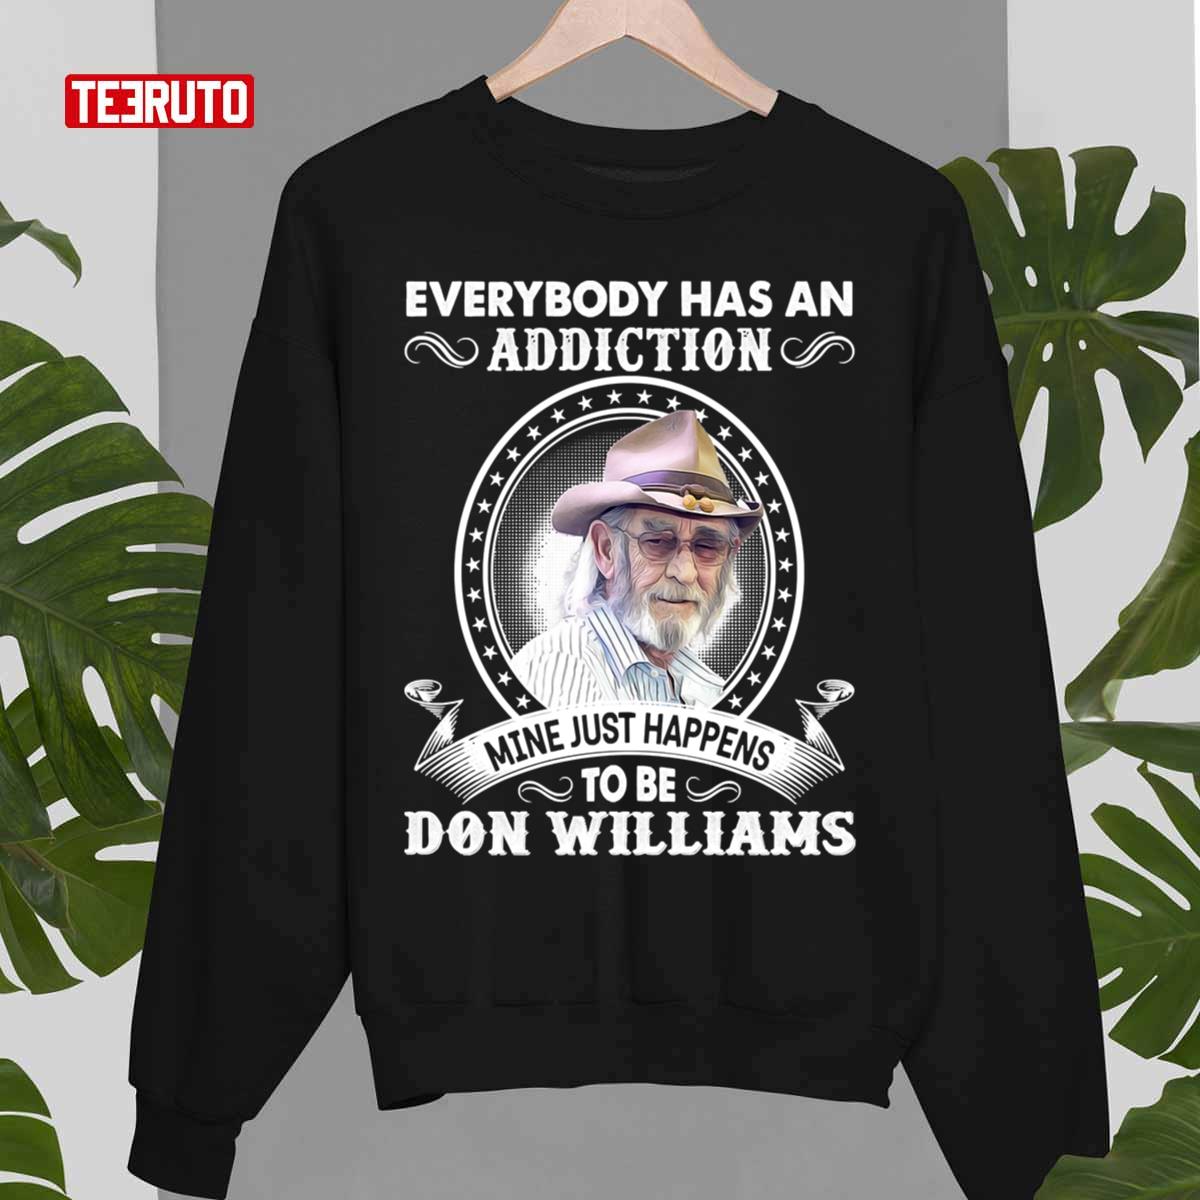 Don Williams Shirt 